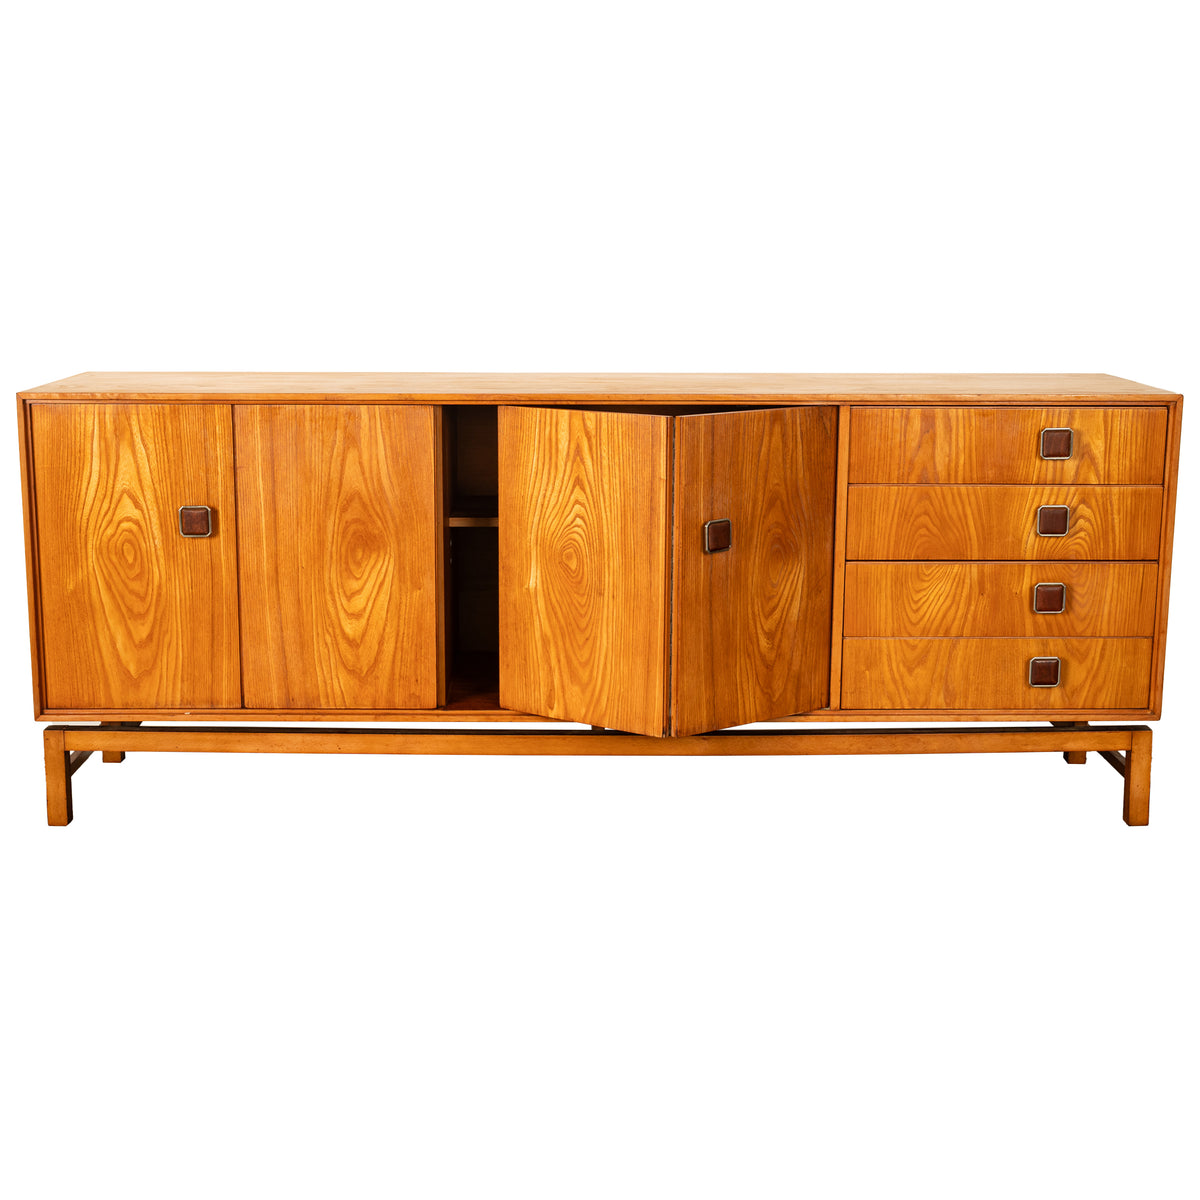 Original Danish Mid Century Modern Teak Credenza Sideboard Cabinet 6' Long 1960